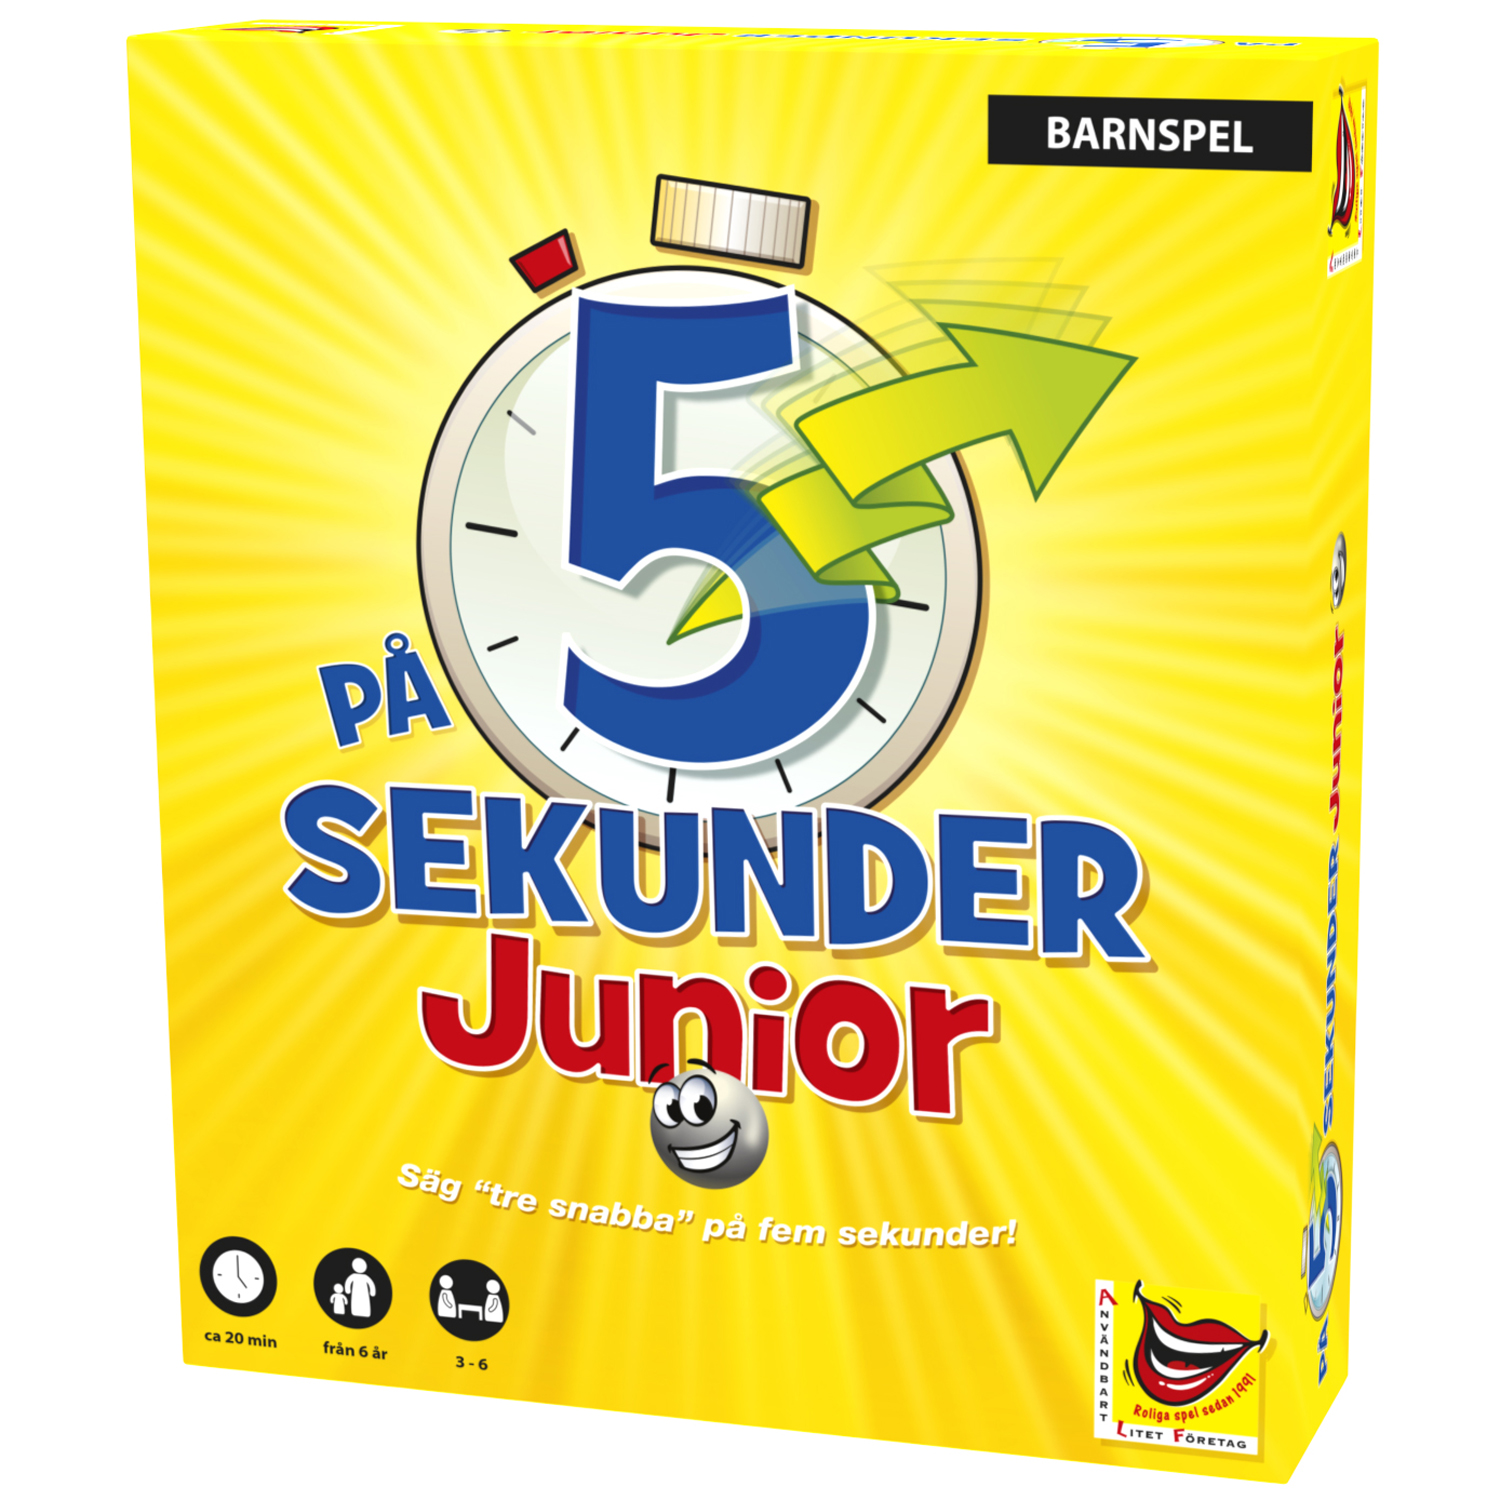 På 5 Sekunder Junior (SE)